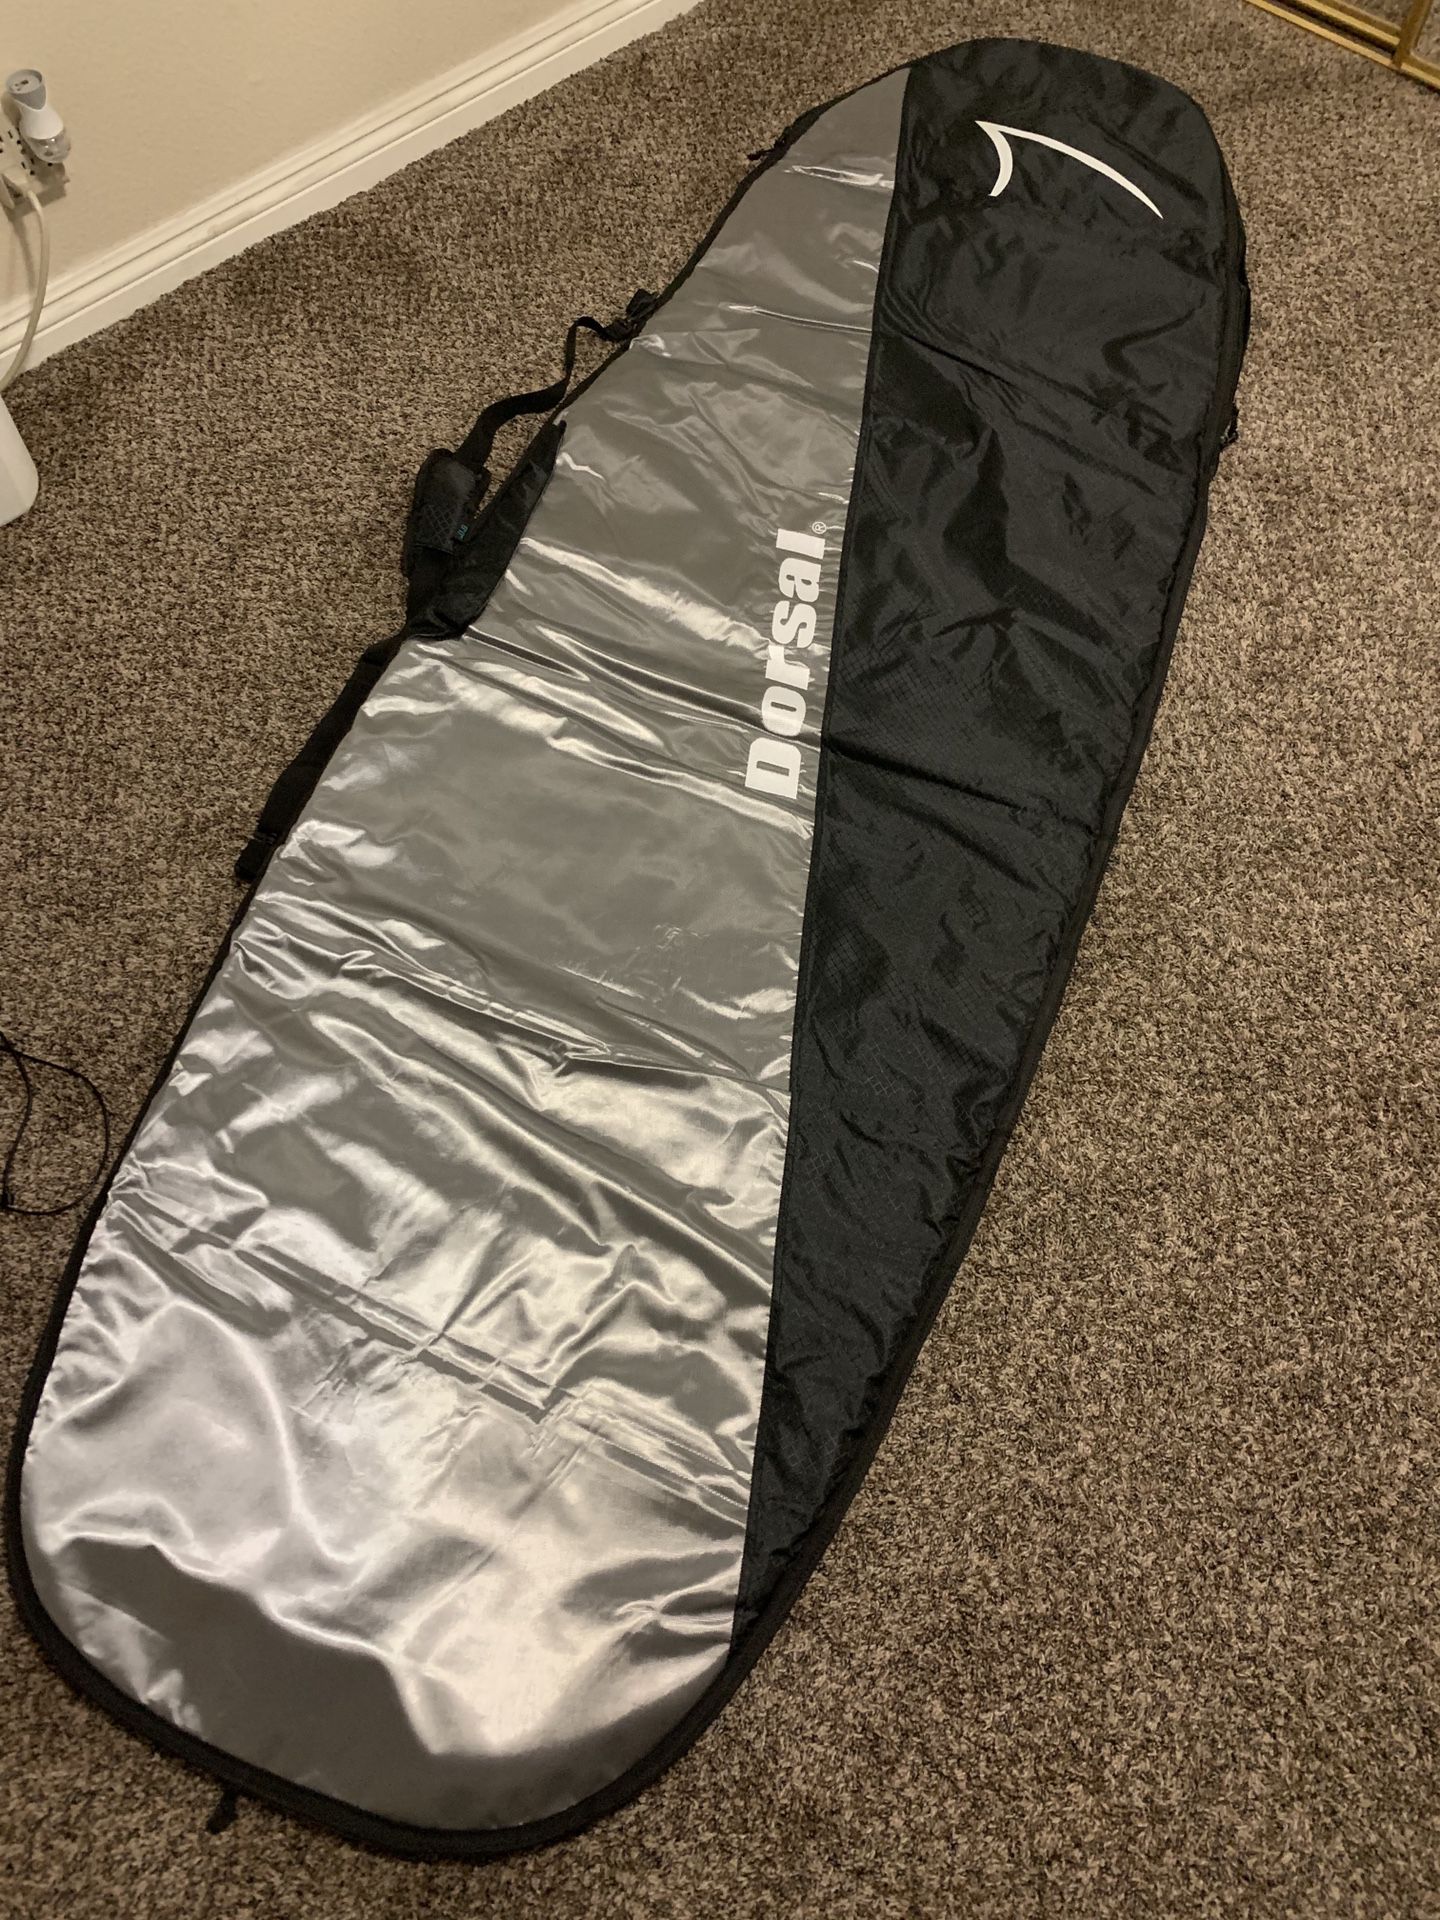 Surfboard bag- Dorsal board carry bag 8’0 - BRAND NEW w/o tags